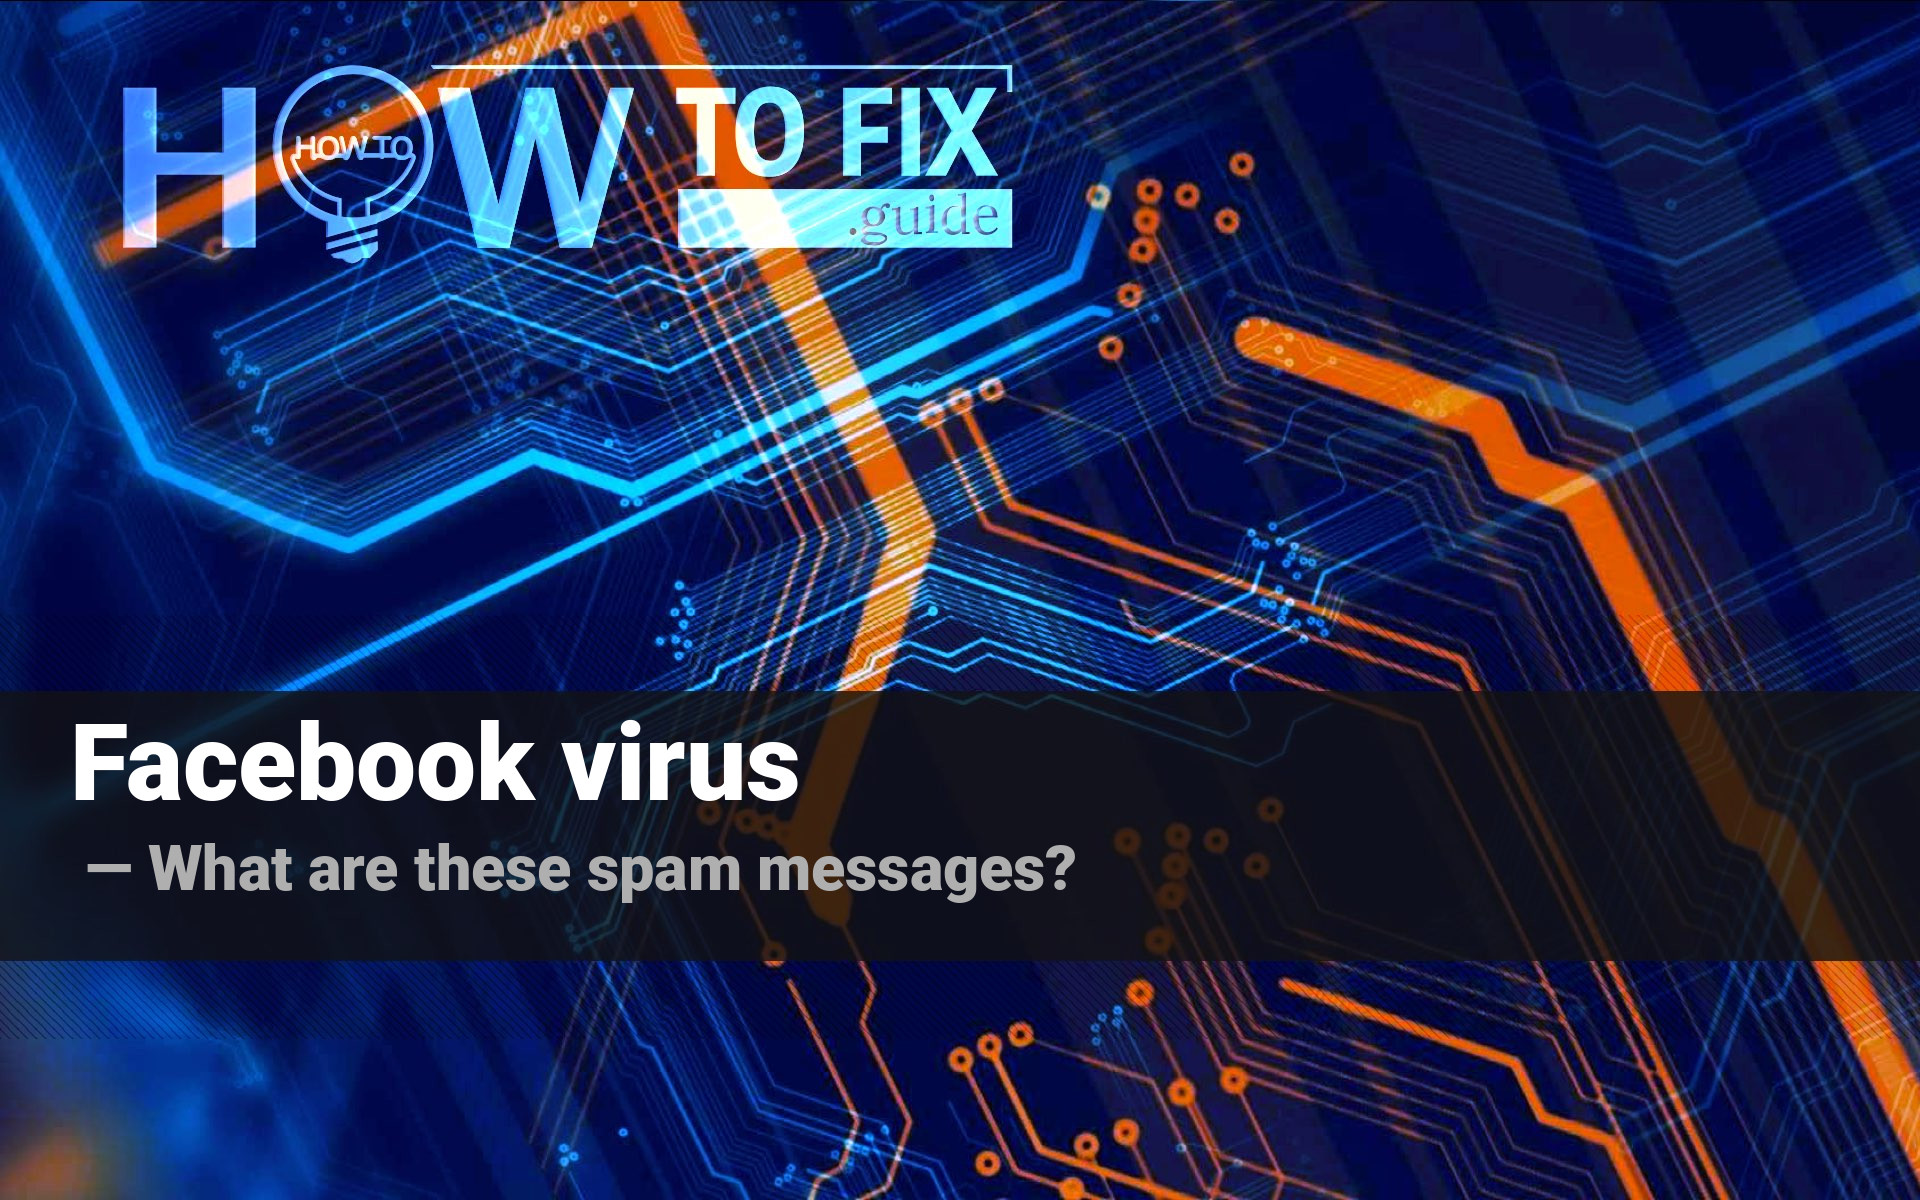 Facebook virus - what is it? Remove Facebook virus